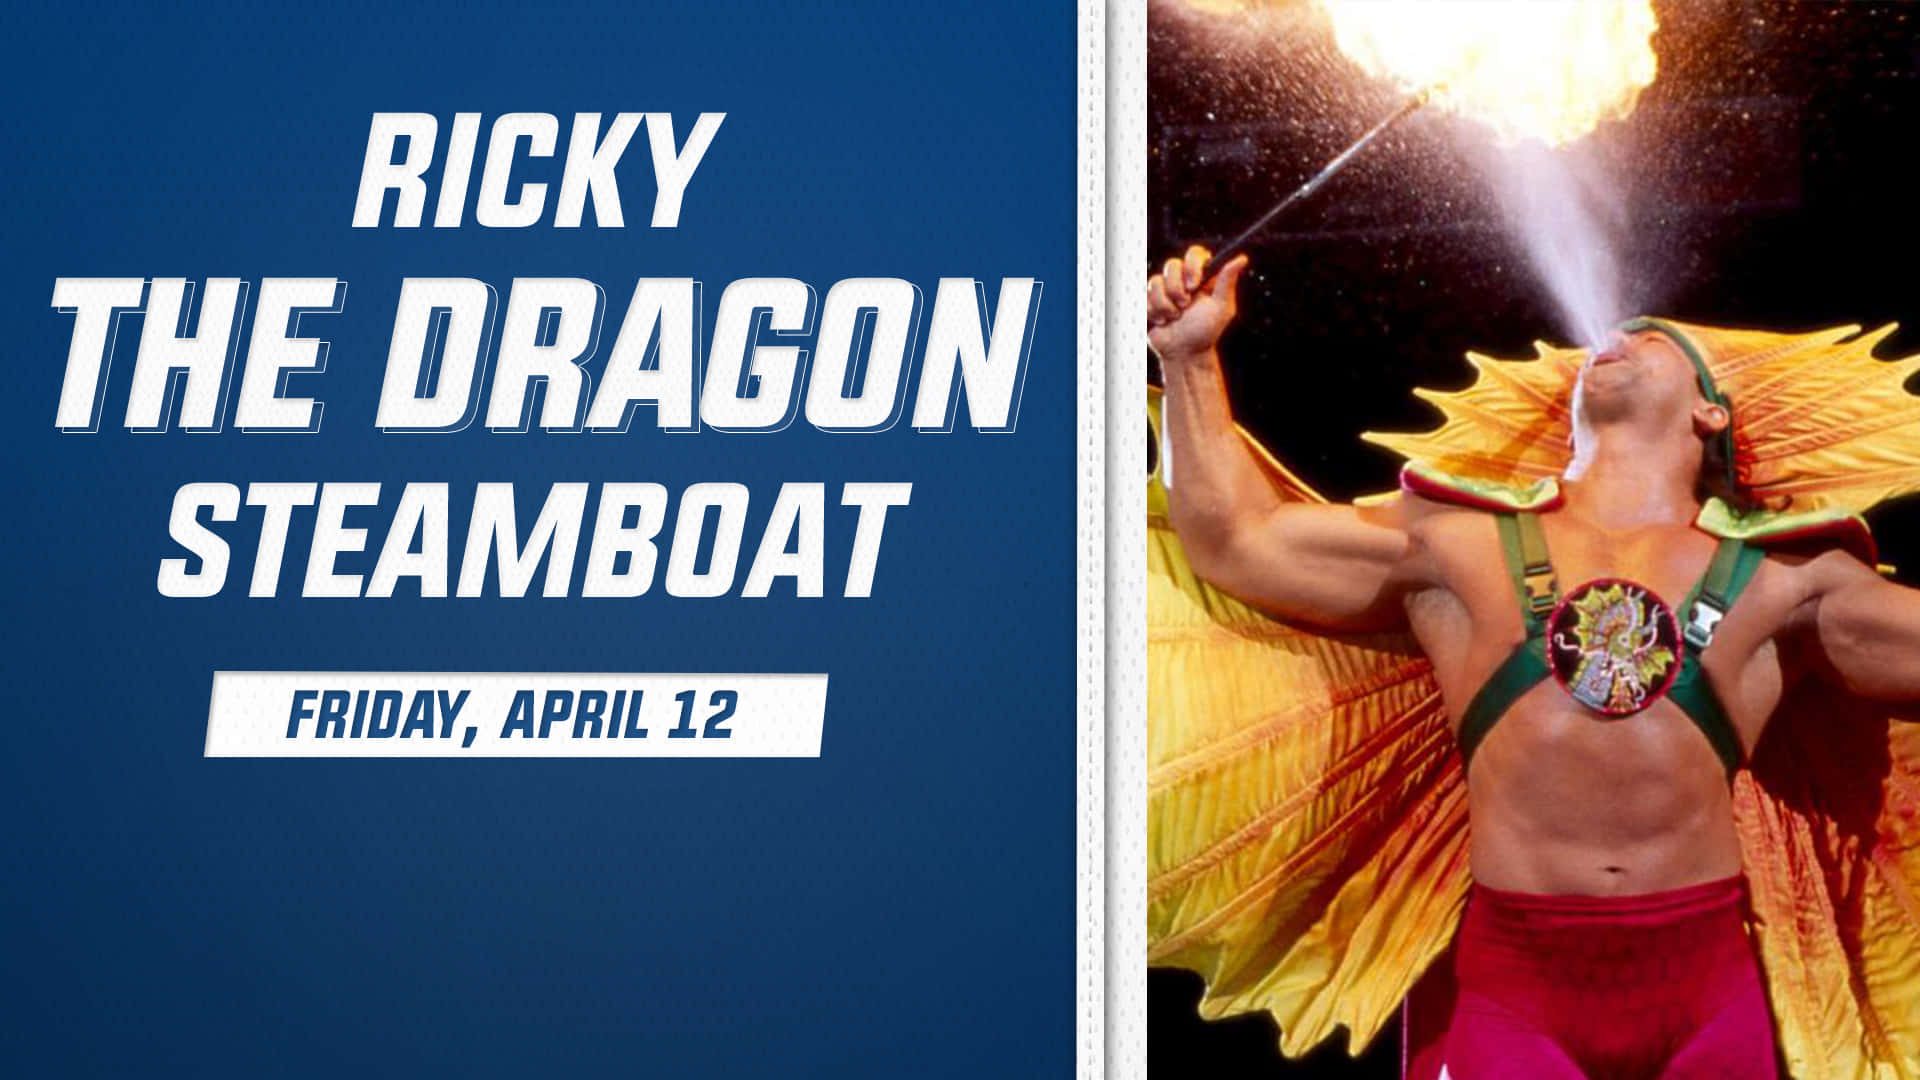 Rickysteamboat The Dragon - Ricky Steamboat Draken. Wallpaper